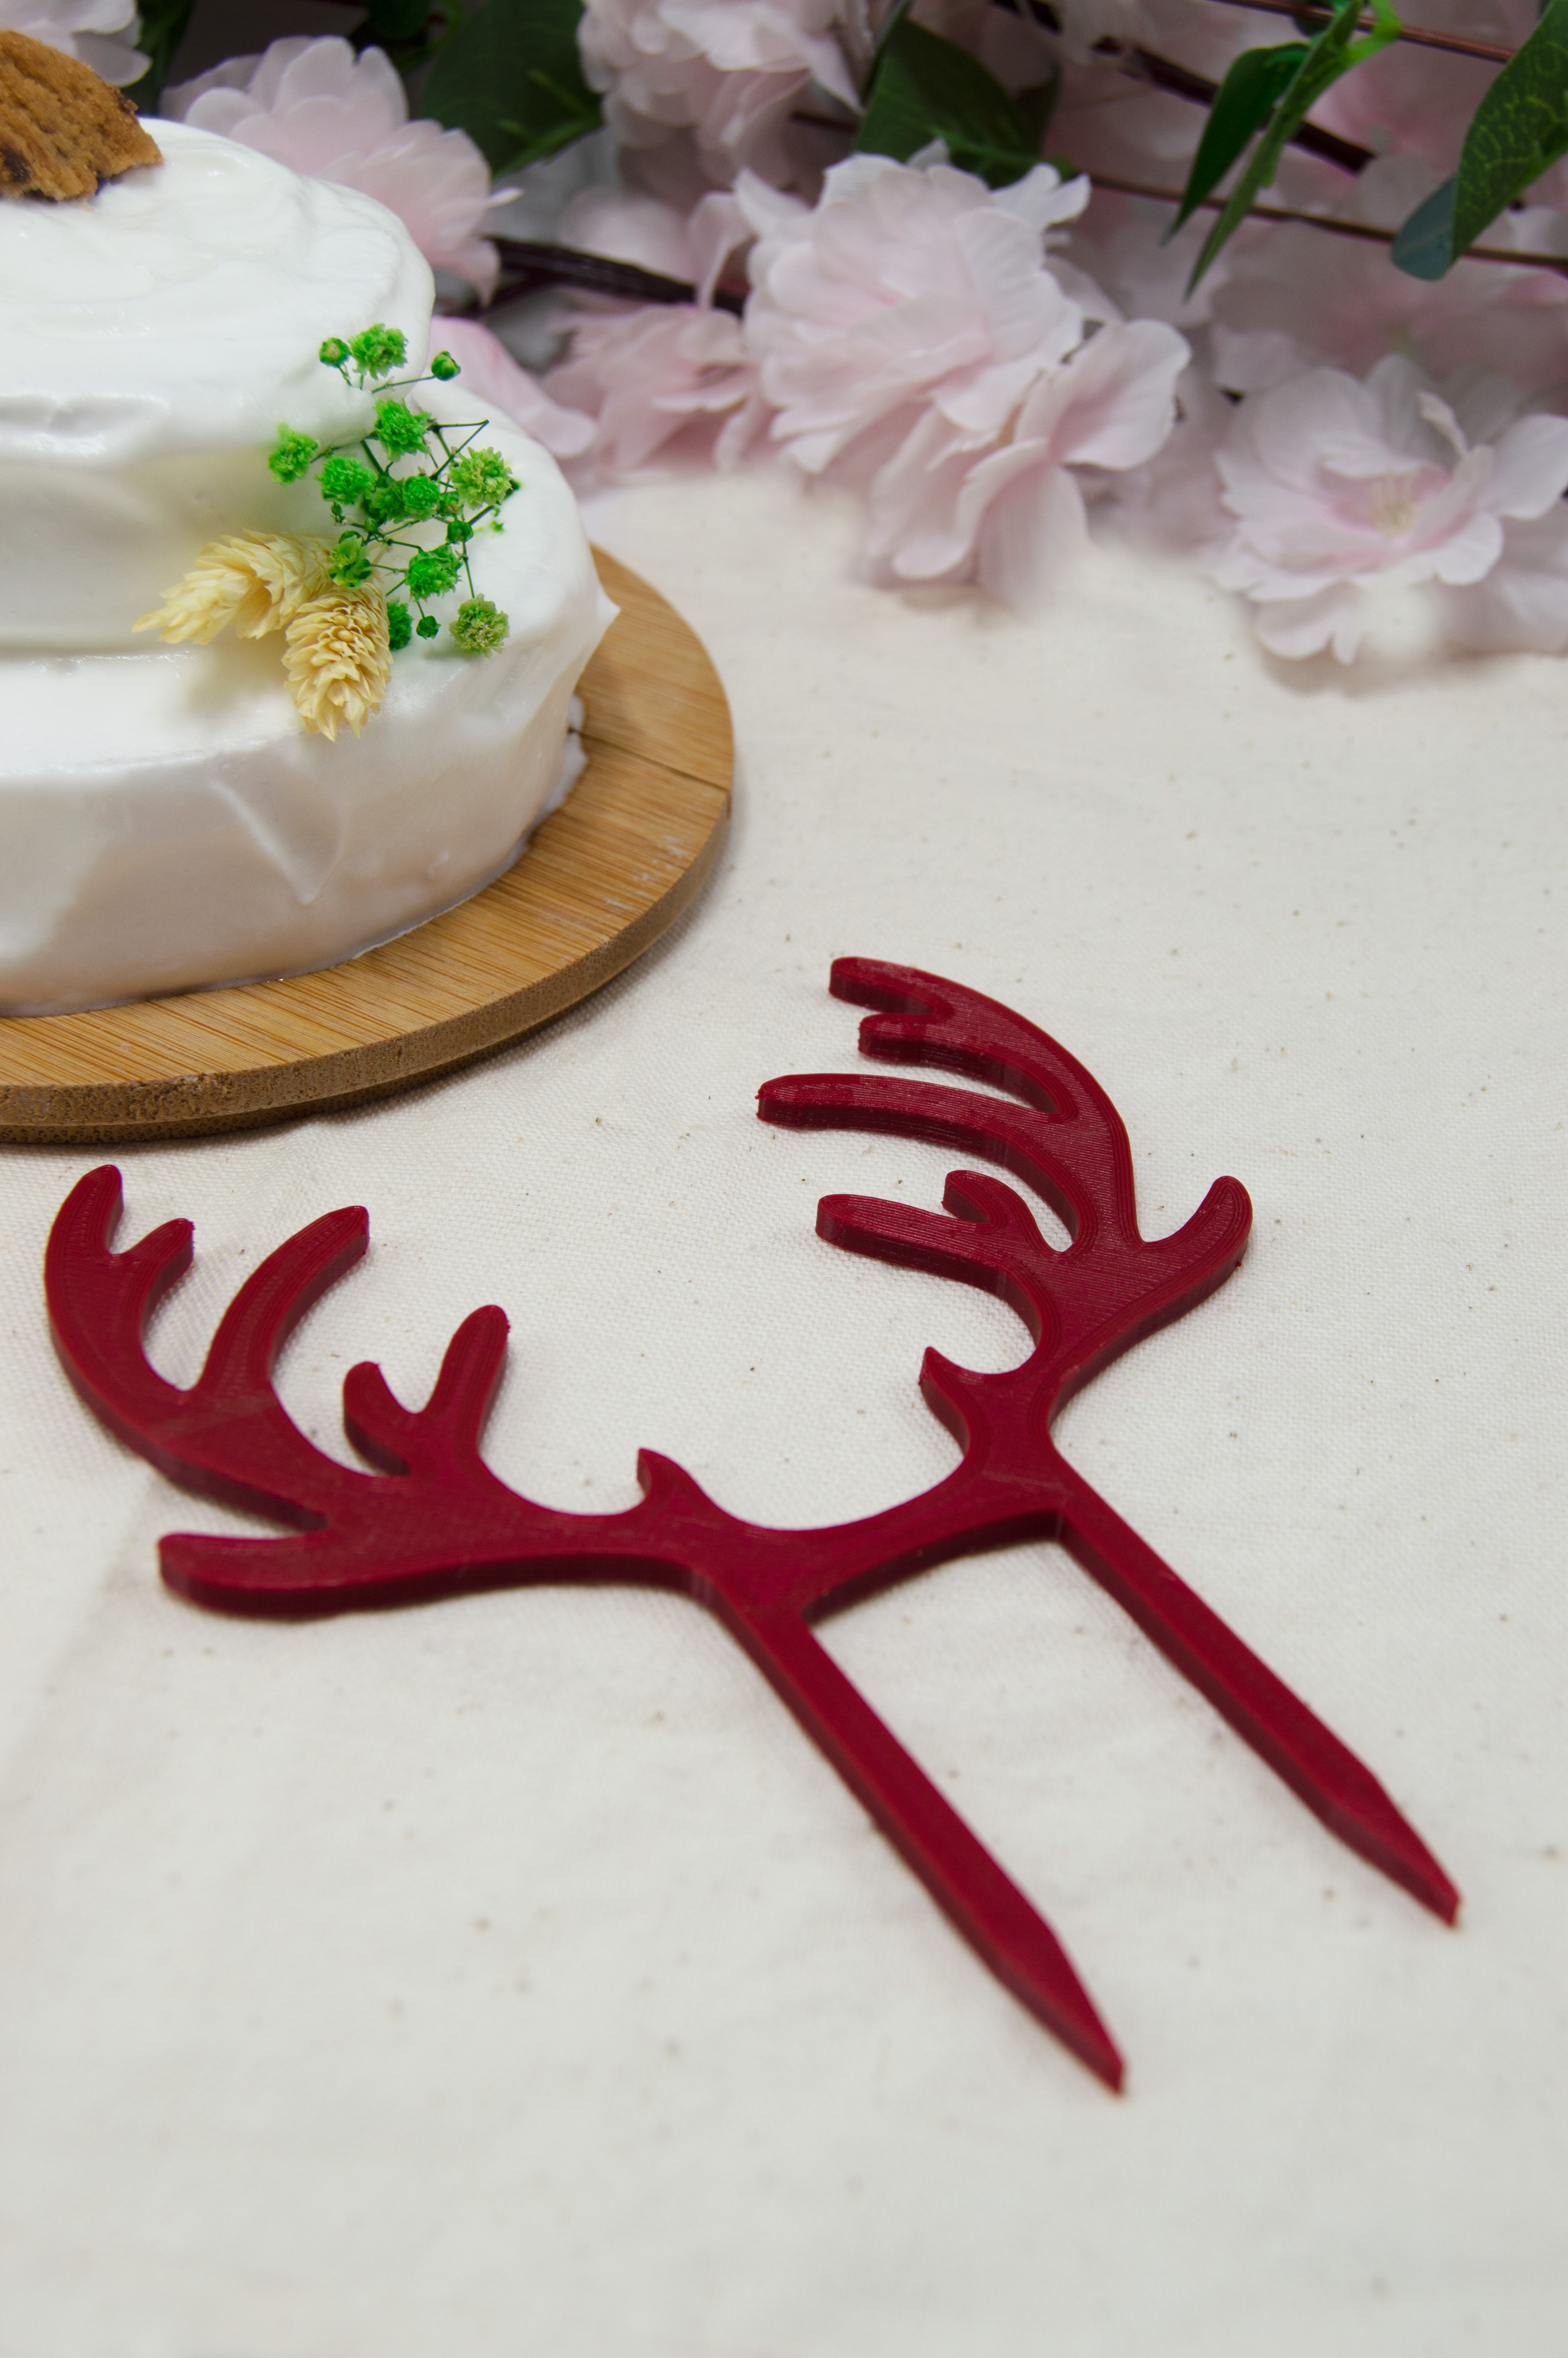 Christmas Yılbaşı Geyik Doğum Günü Parti Pasta Üzeri/Üstü Pasta Süsü Çubuğu